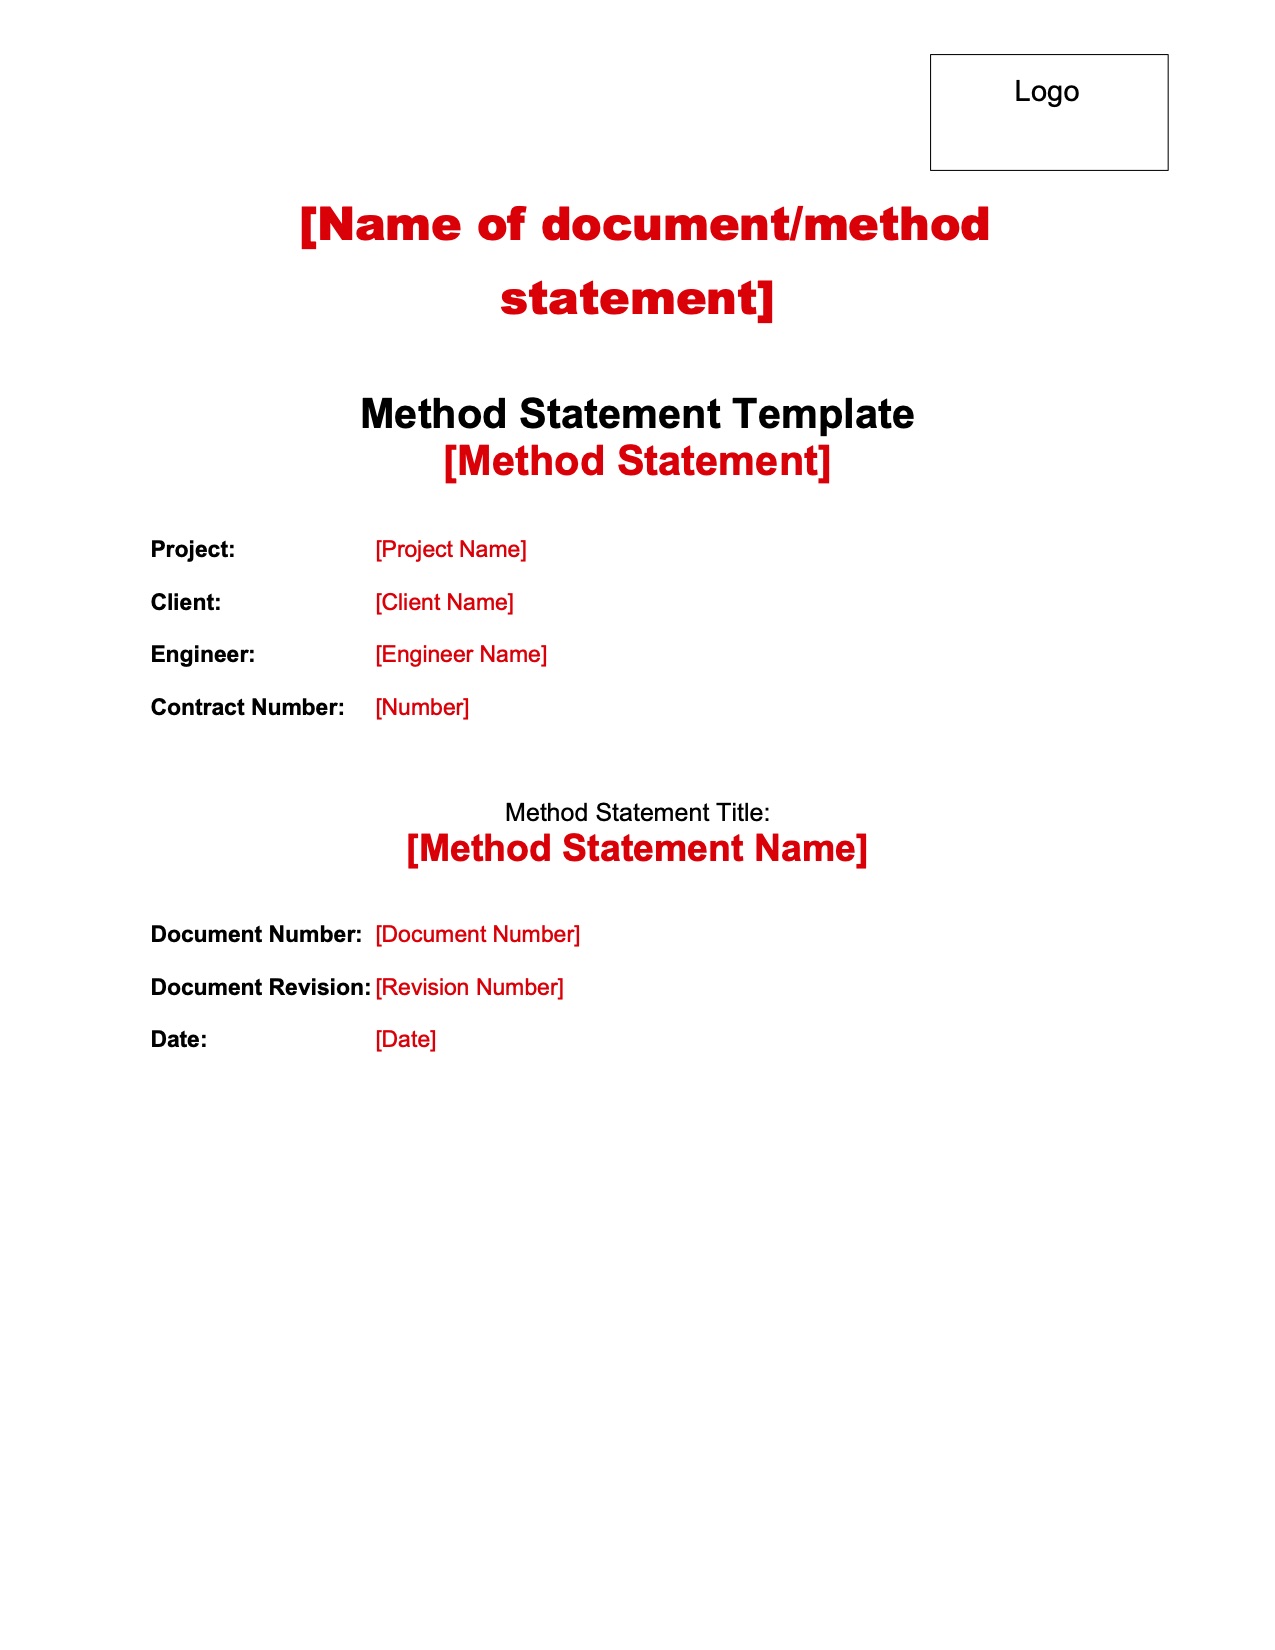 CT039 - Method Statement Template